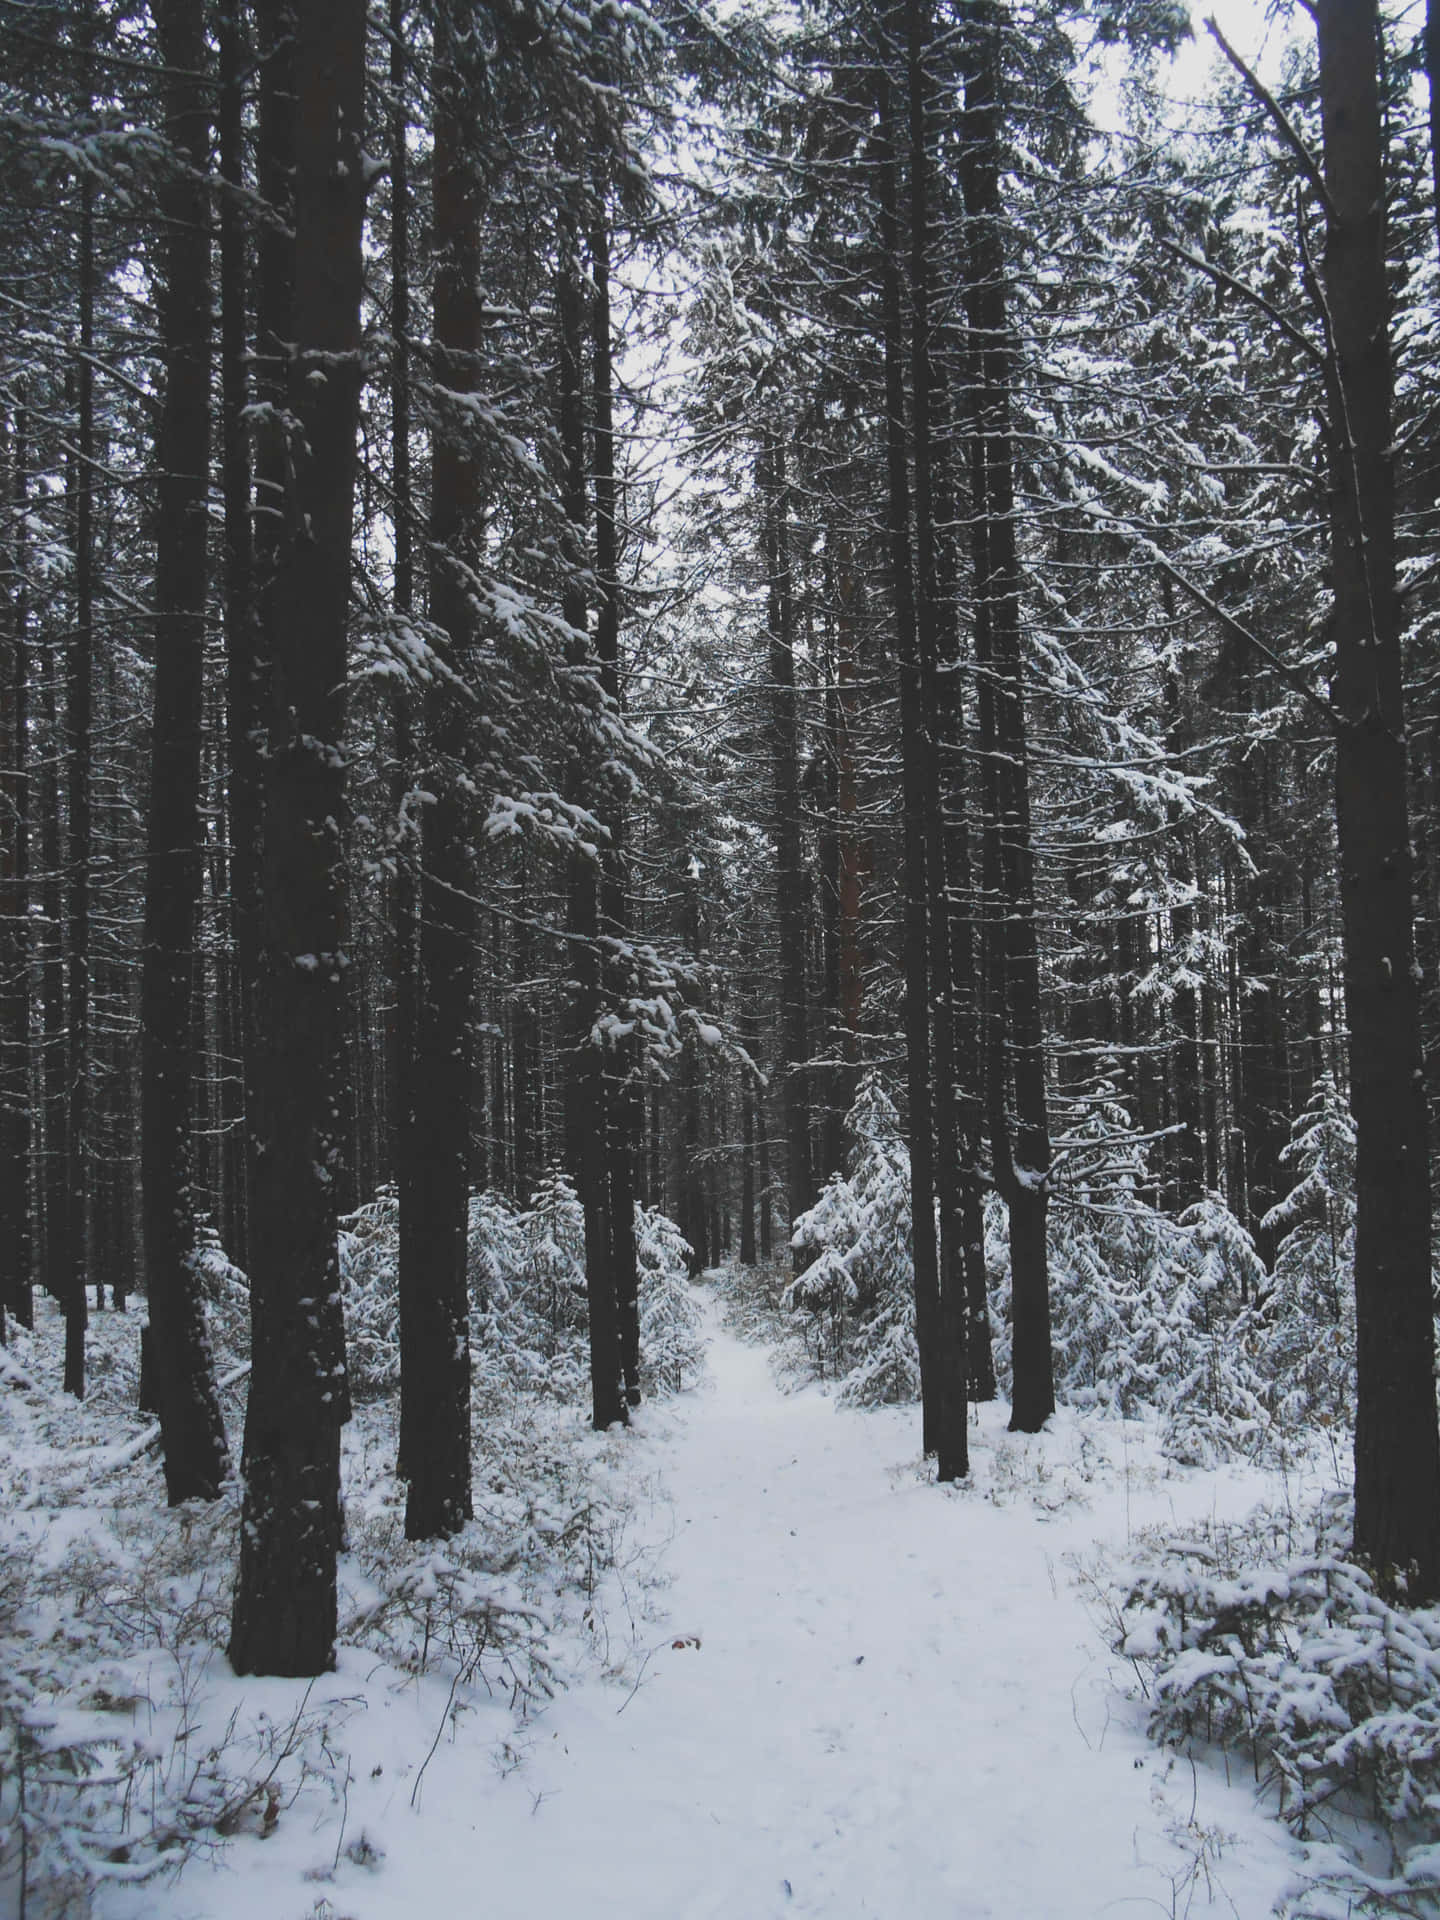 Stunning Winter Scene in a Snowy Forest